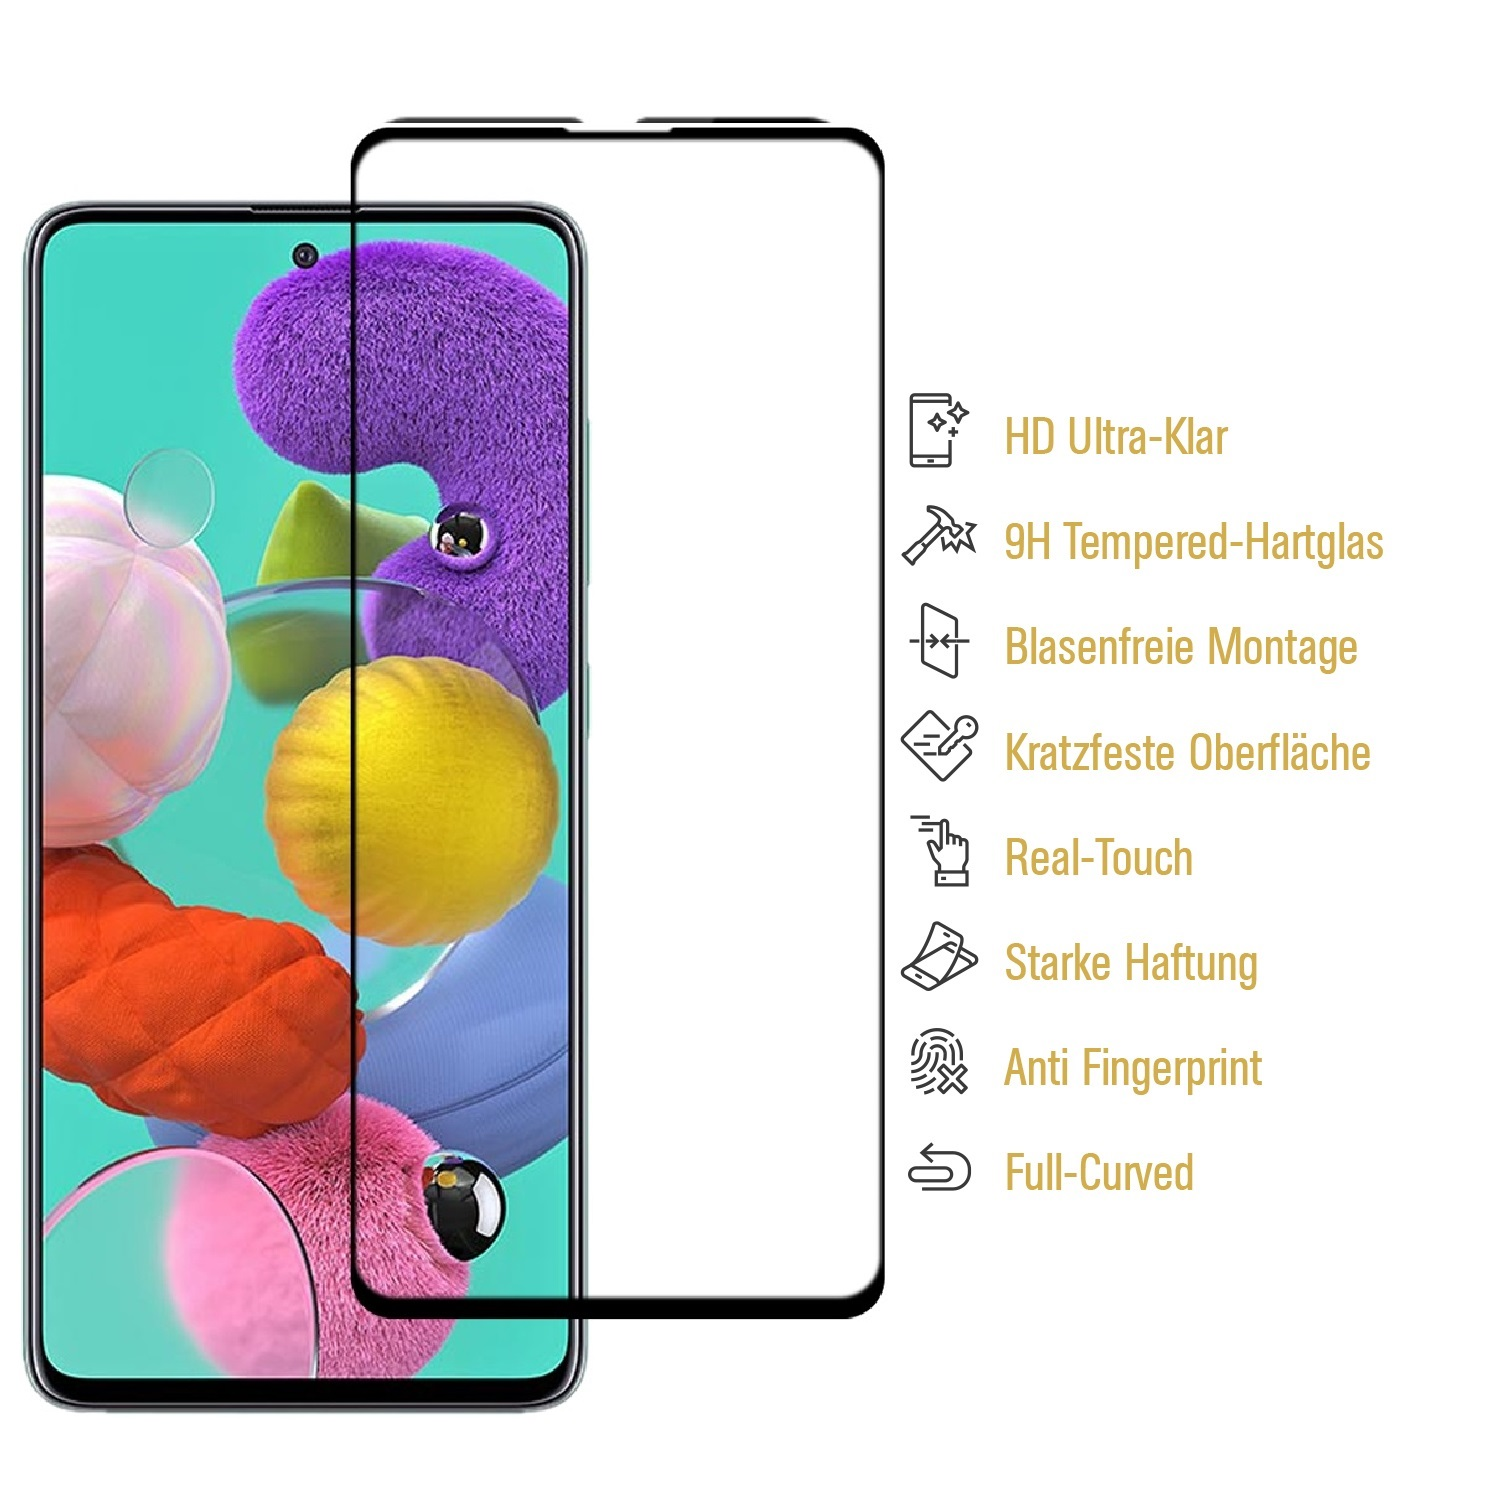 COVER PROTECTORKING Hartglas Displayschutzfolie(für 9H Galaxy 2x A51) FULL Samsung HD KLAR